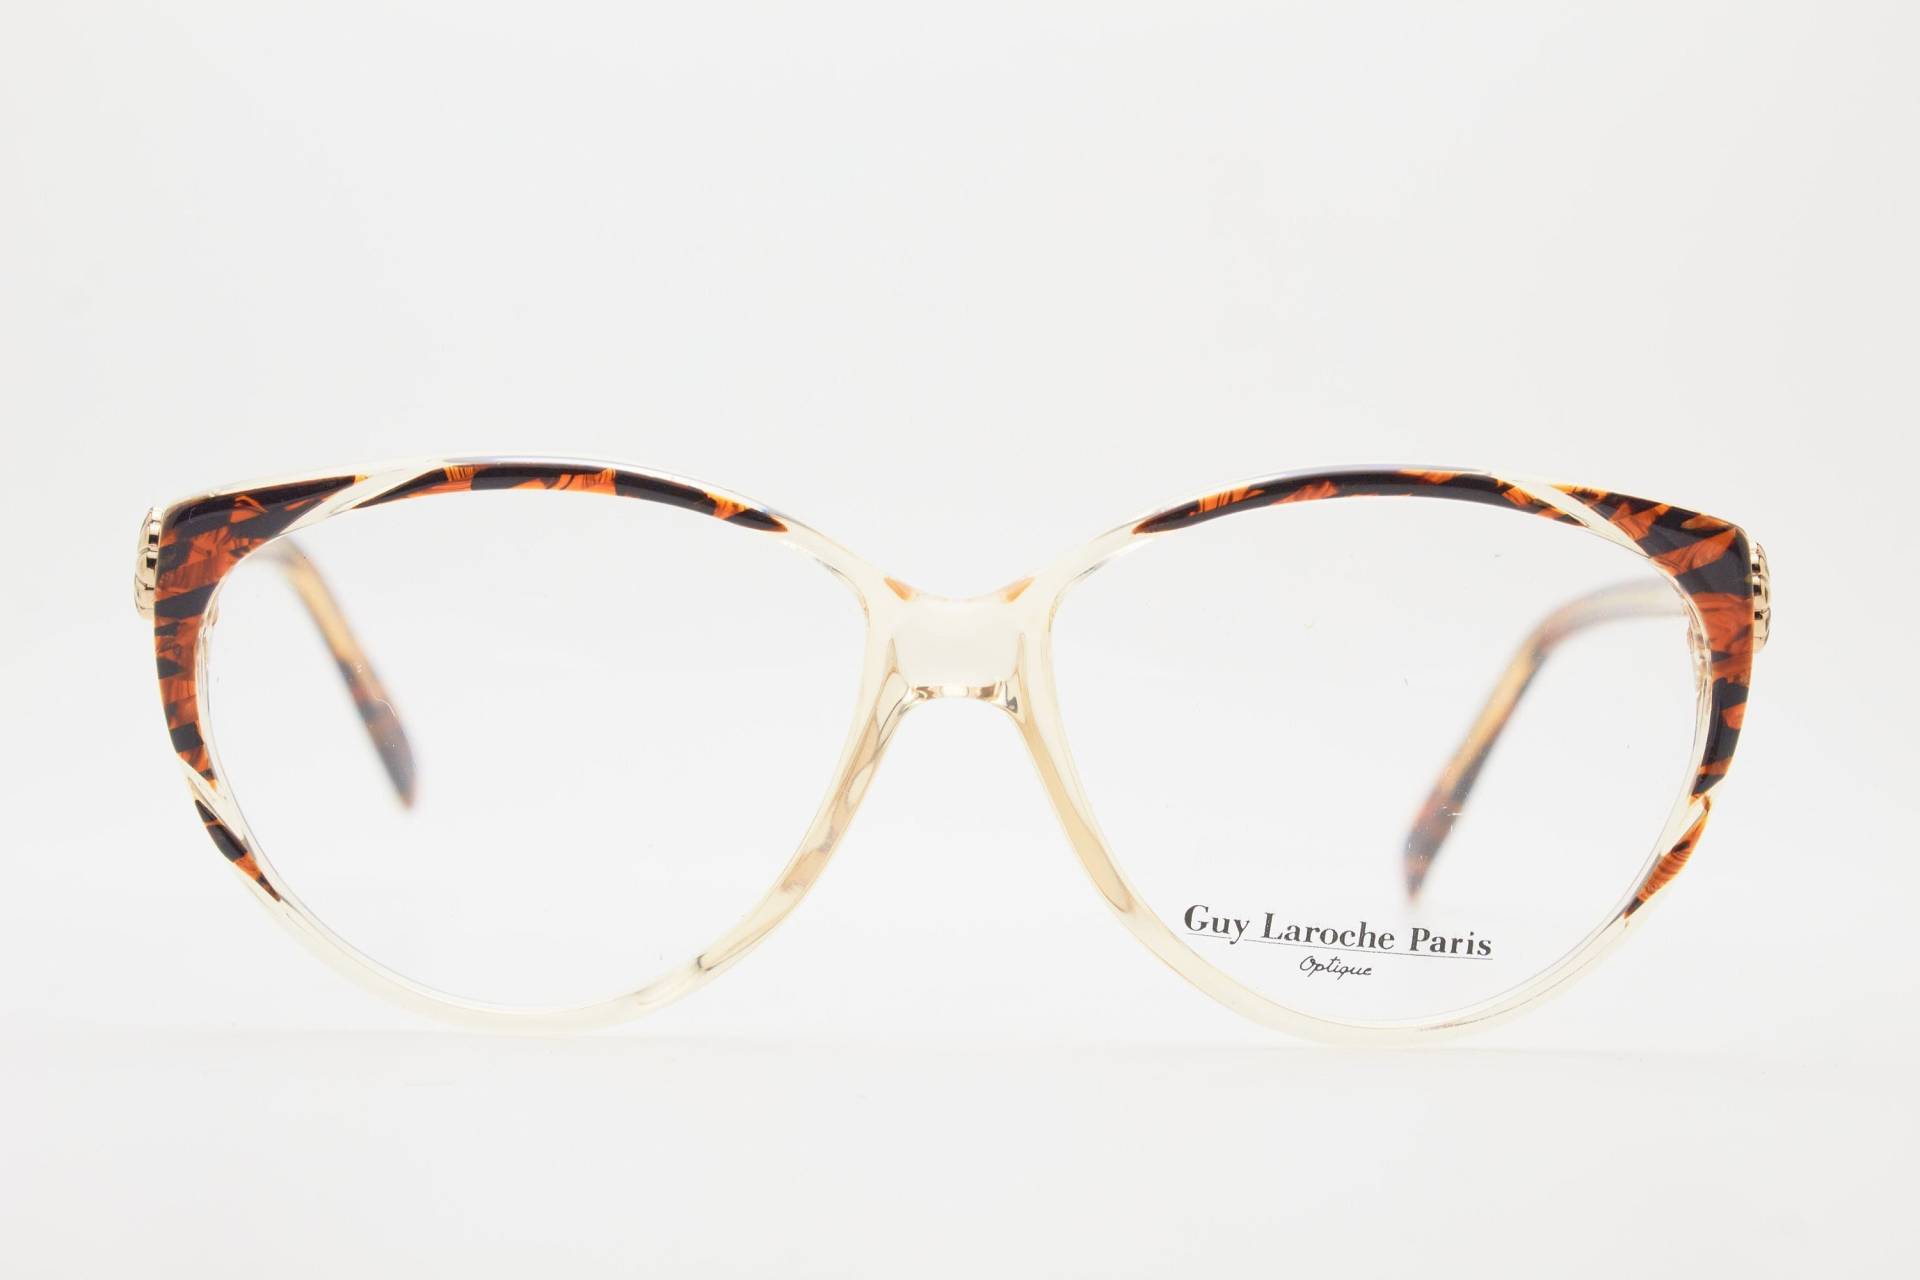 Guy Laroche Paris Vintage Brillen 1980Er Jahre Plastik Oversize Sonnenbrille Schmetterlingsbrille Damenbrillen Schmetterlingsbrillen von VintageGlassesVault